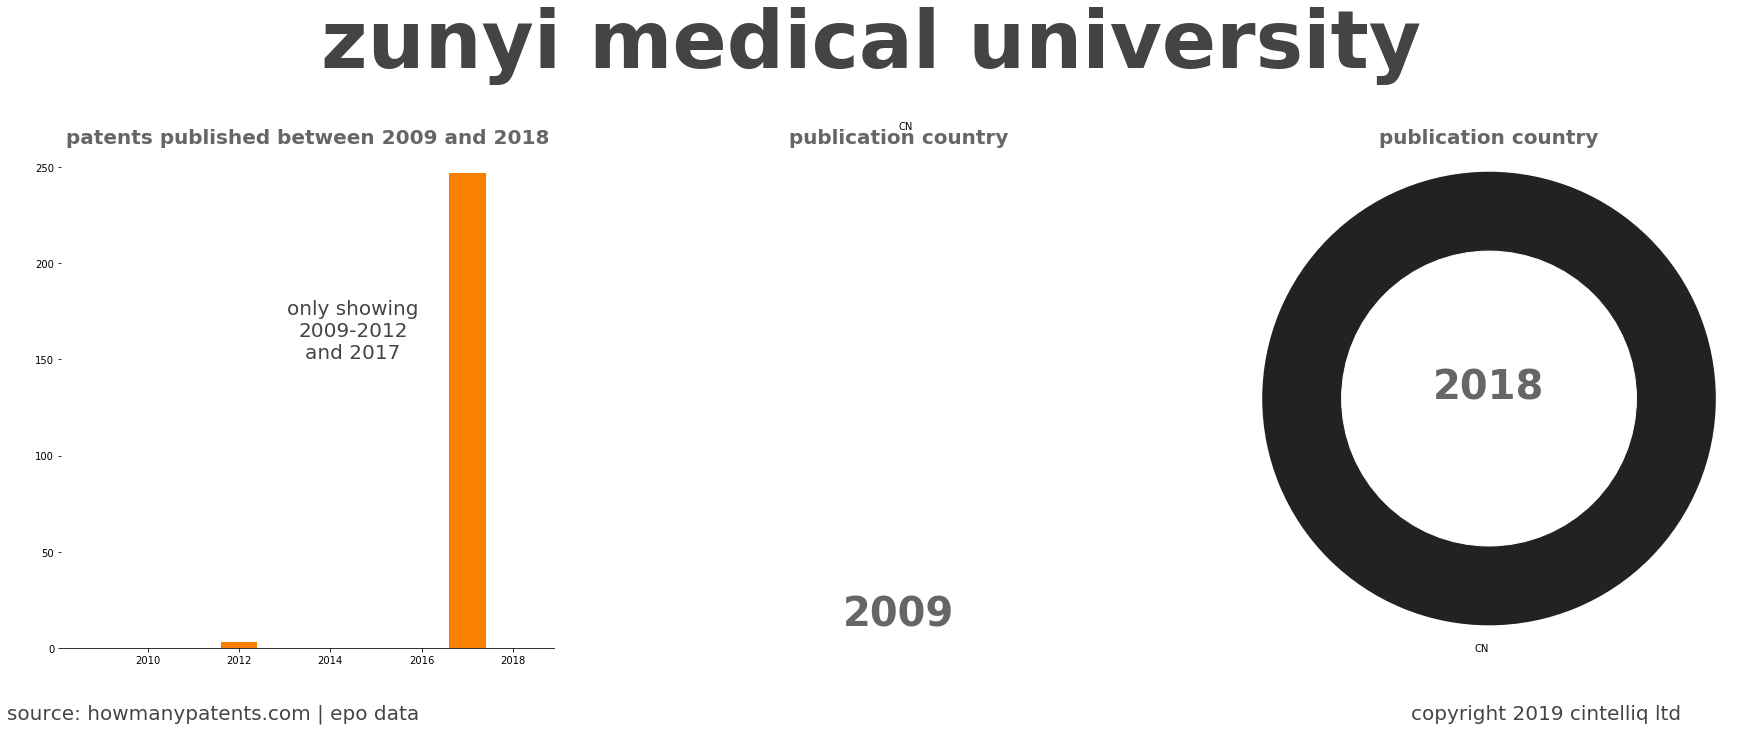 summary of patents for Zunyi Medical University